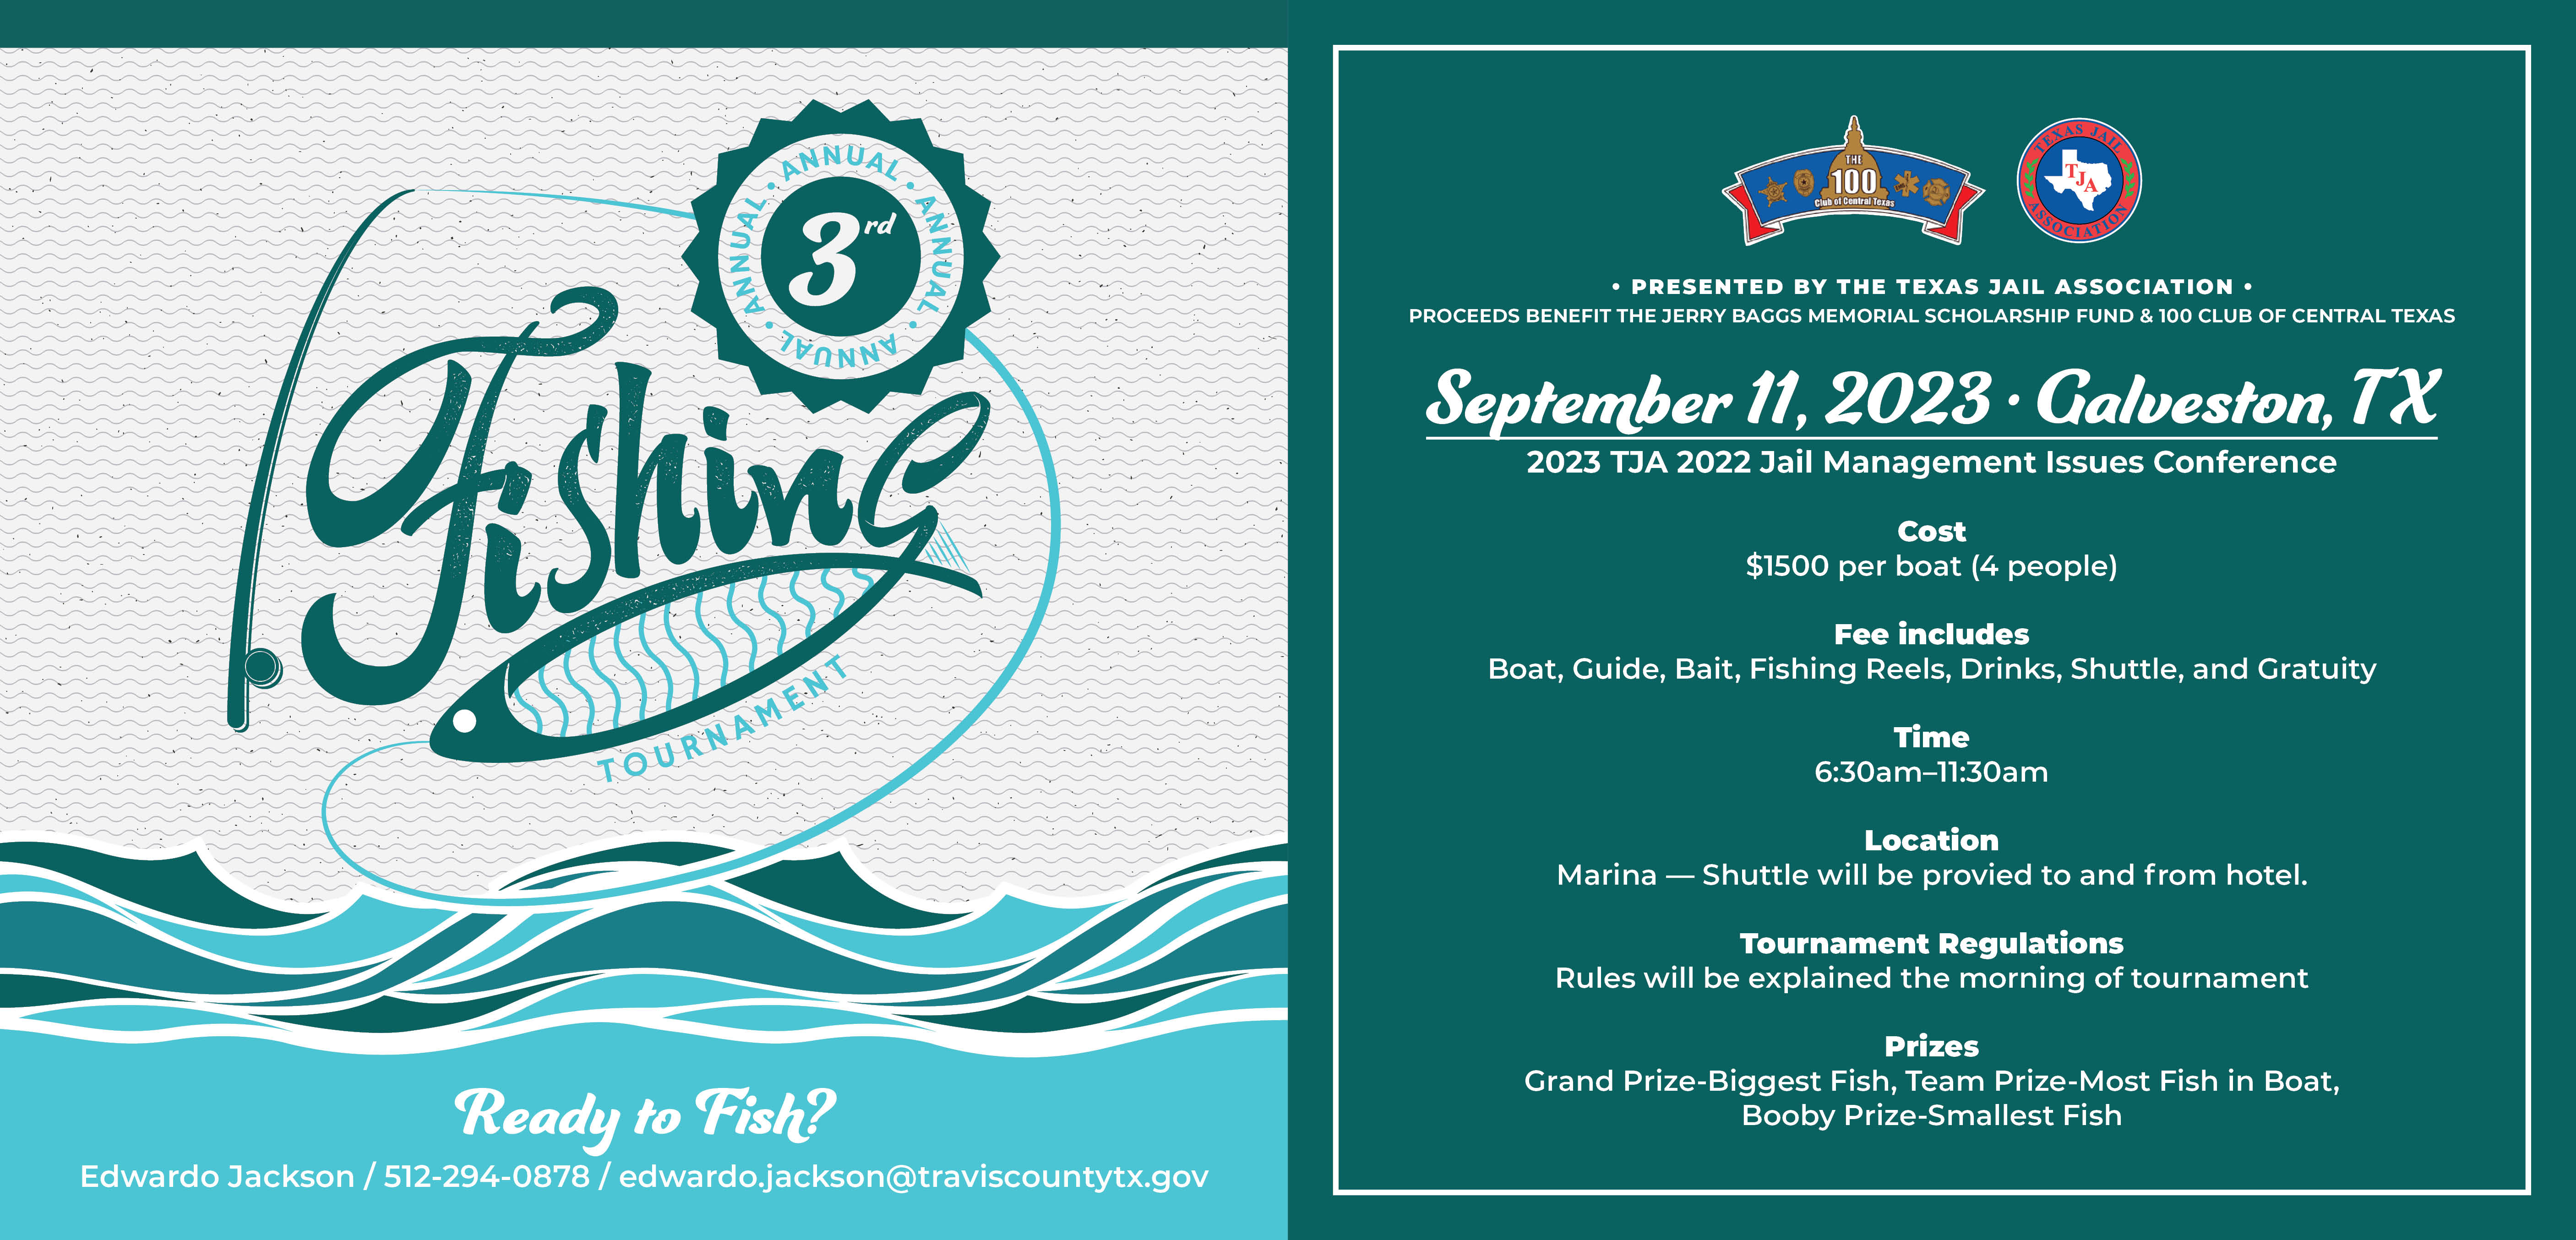 Texas Jail Association Fishing Tournament - September 11, 2023, Galveston, TX